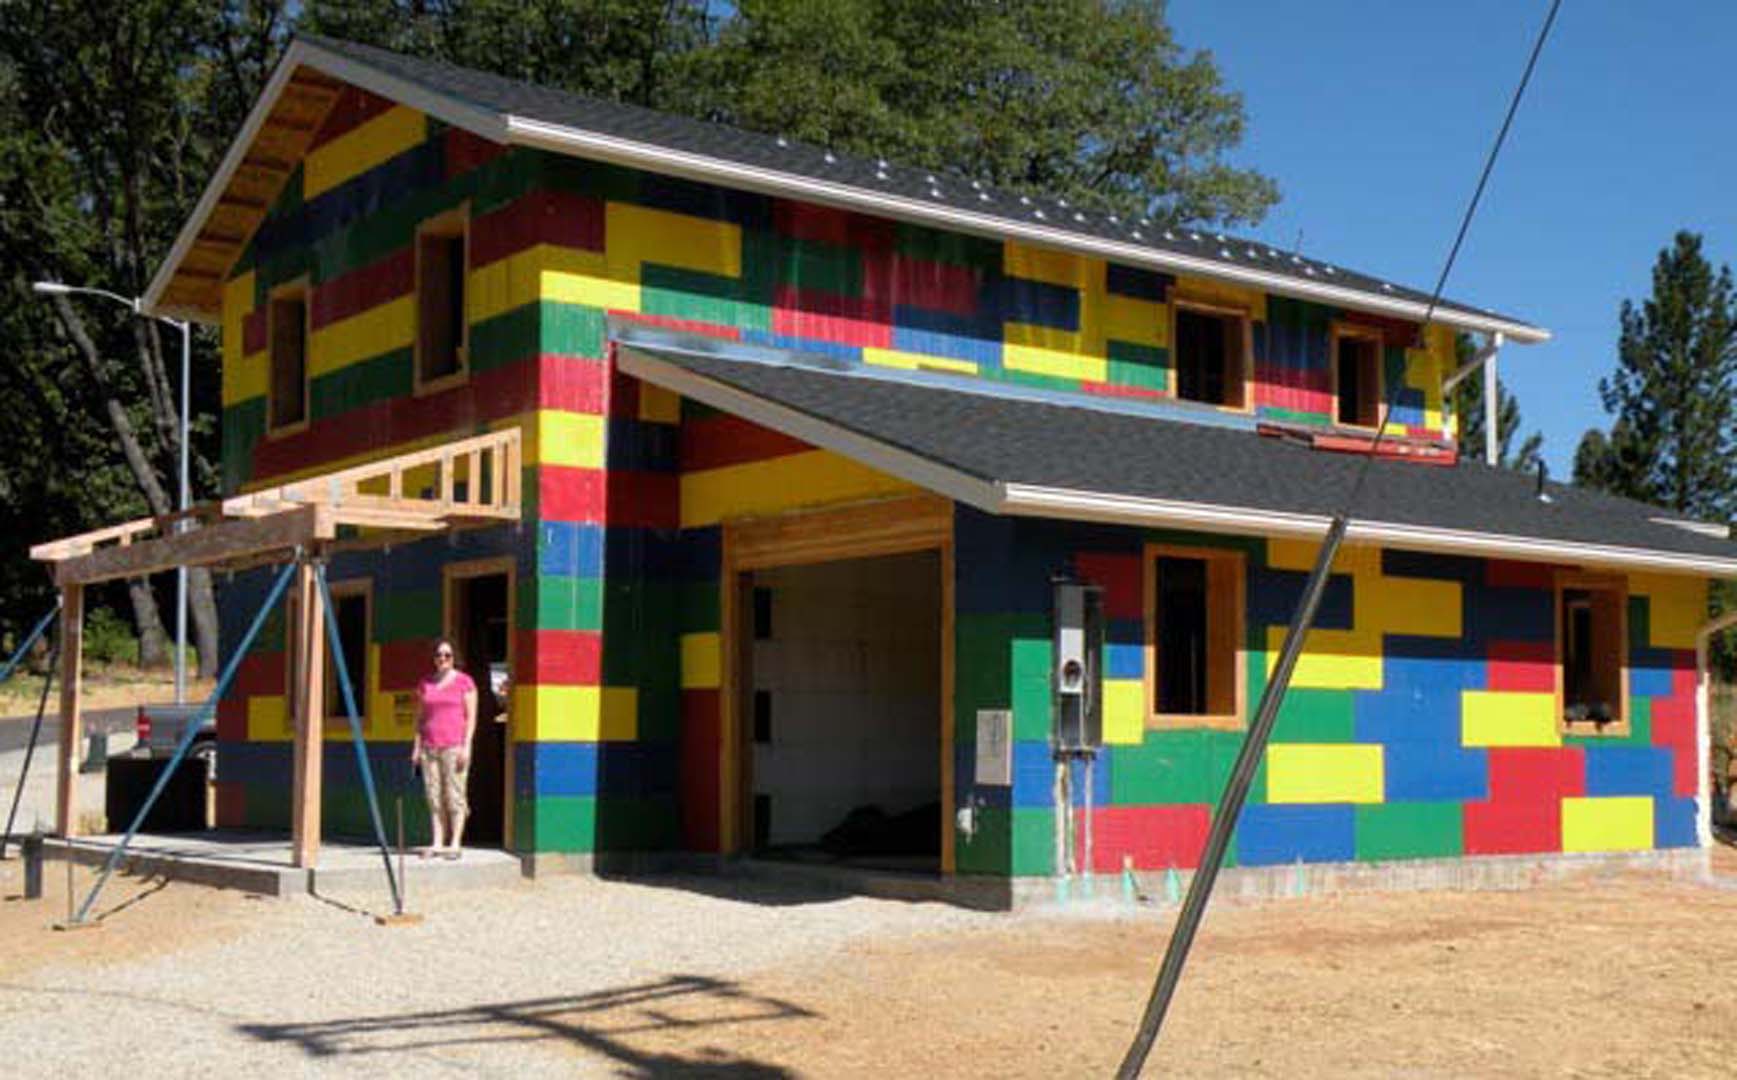 BuildBlock ICF Habitat for Humanity Blitz Build House in Nevada County 2012